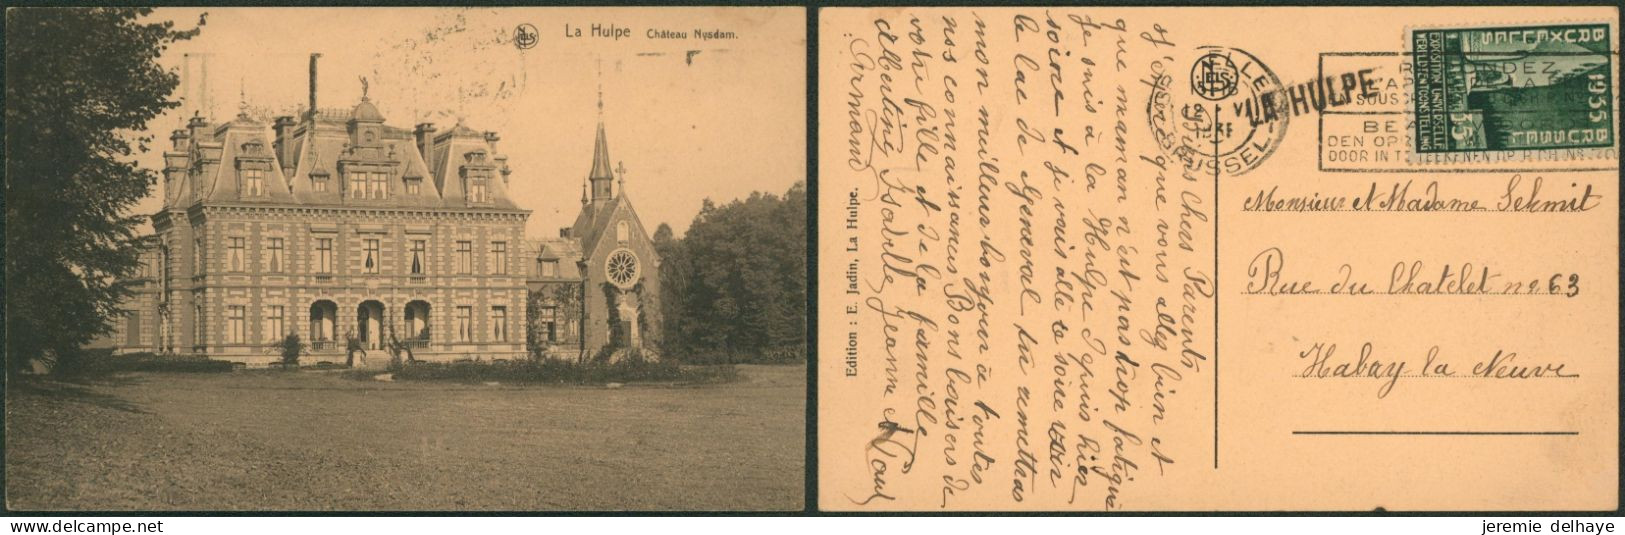 Carte Postale - La Hulpe : Chateau Nysdam + Griffe à L'origine LA HULPE - La Hulpe